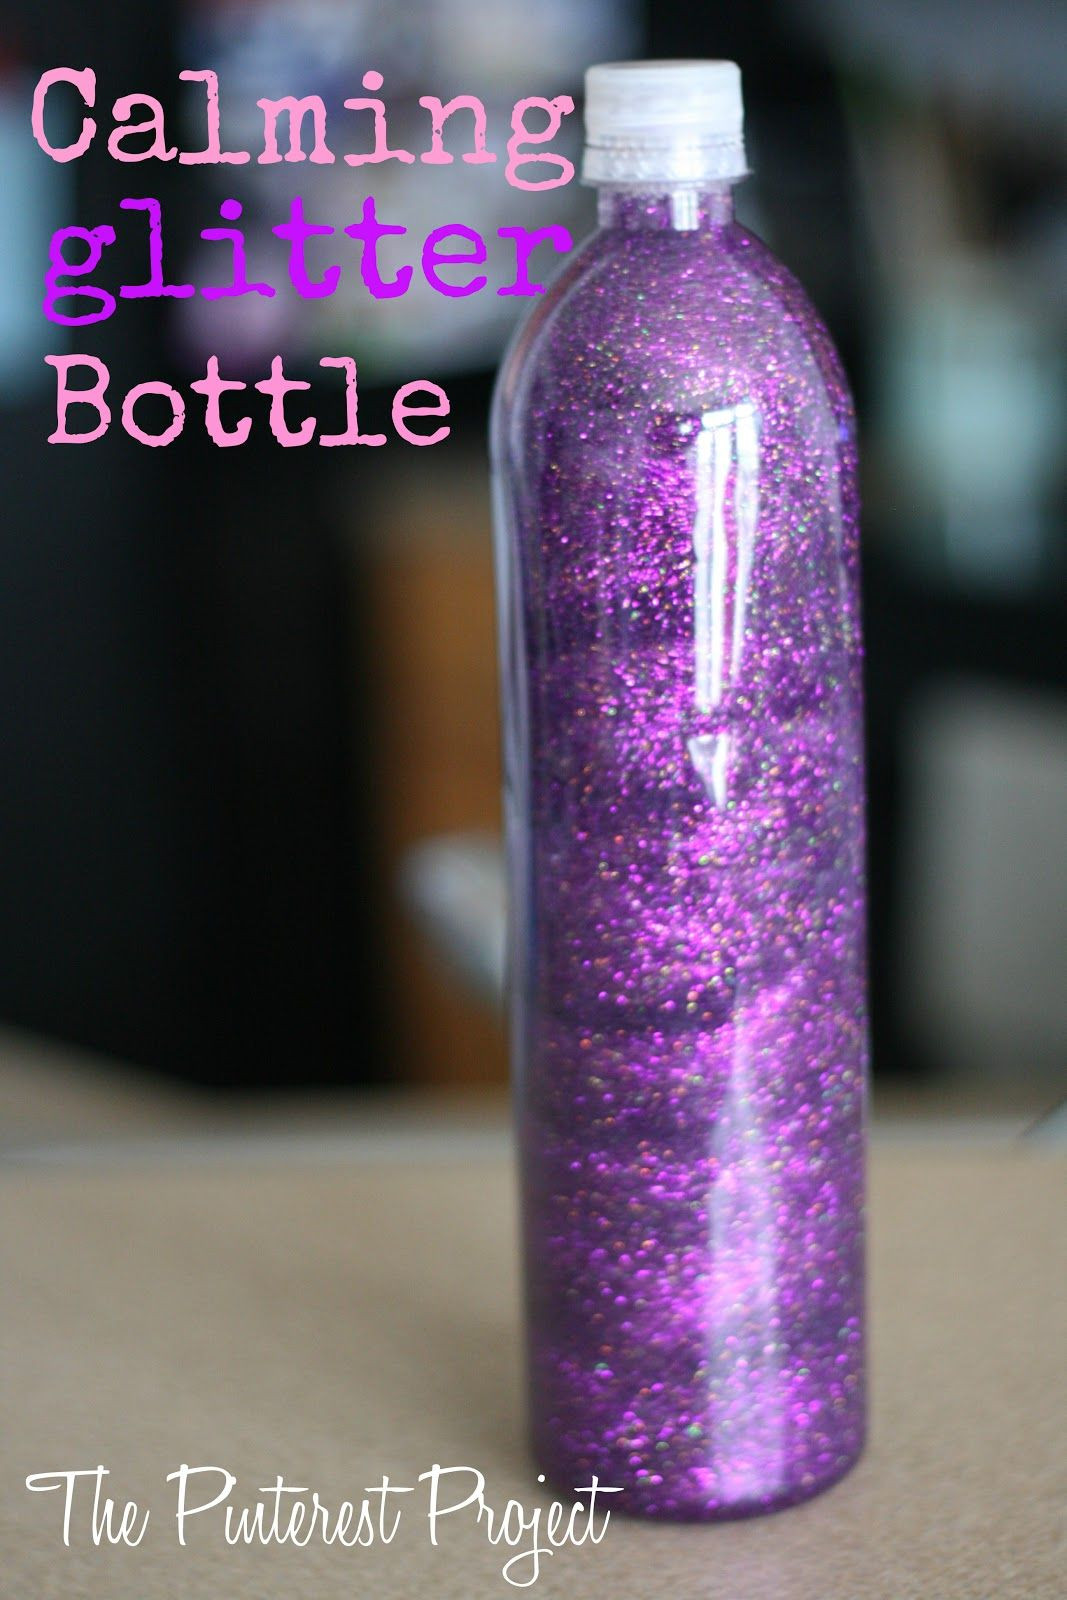 Best ideas about Glitter Bottle DIY
. Save or Pin Glitter Bottles on Pinterest Now.